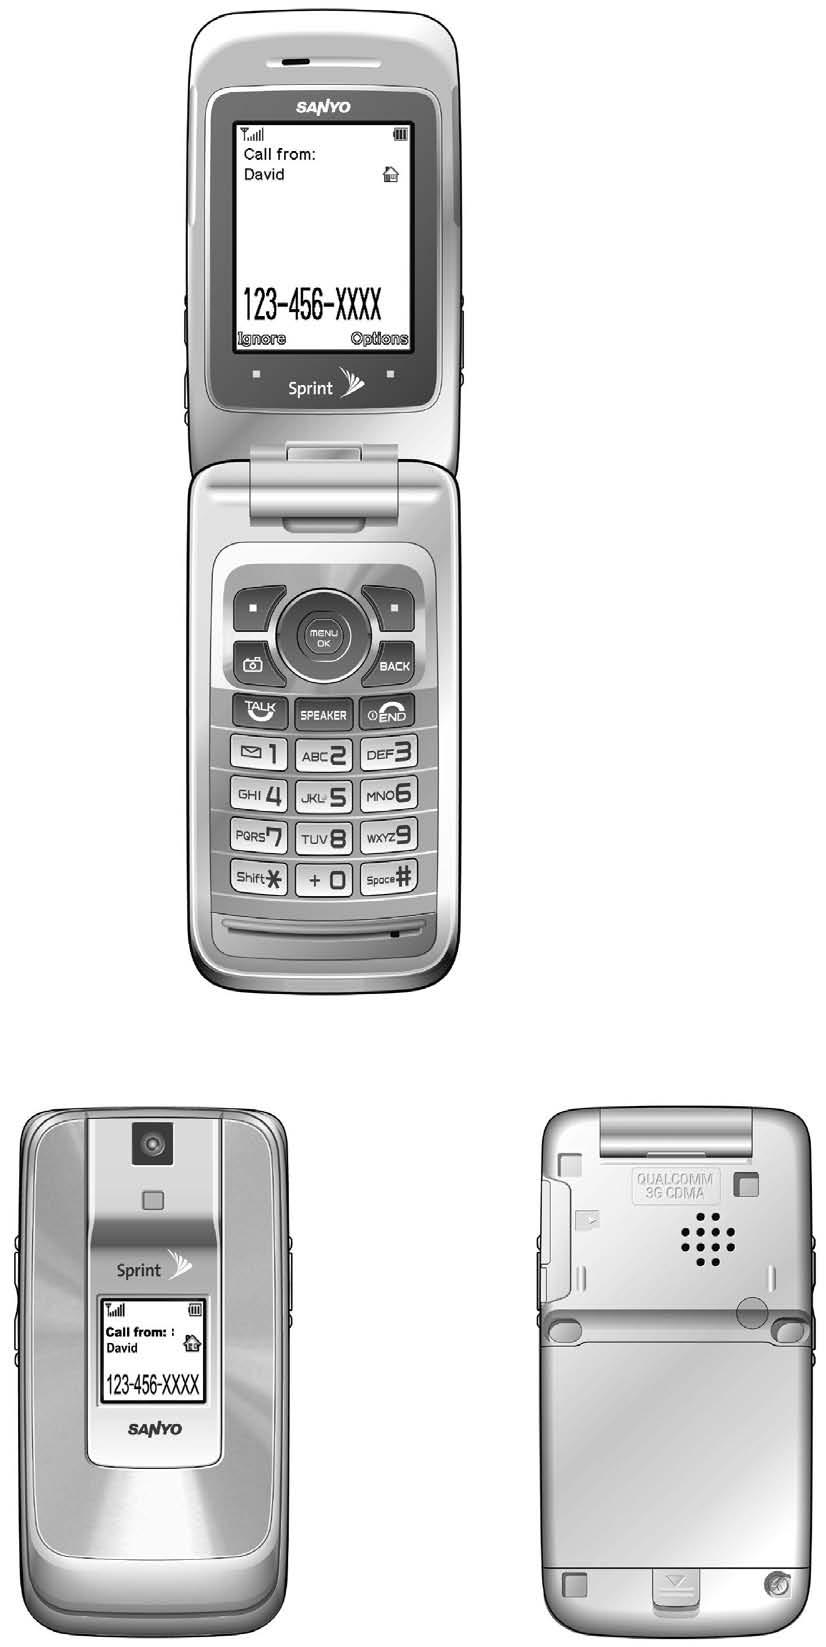 Your Phone 1. Earpiece 2. Main Screen (display) 3. Side Volume Key 4. Navigation Key 5. Charger Jack 6. Softkey (left) 7. MENU/OK Key 8. Camera Key 9. TALK Key 10. SPEAKER Key 19. Side Camera Key 18.